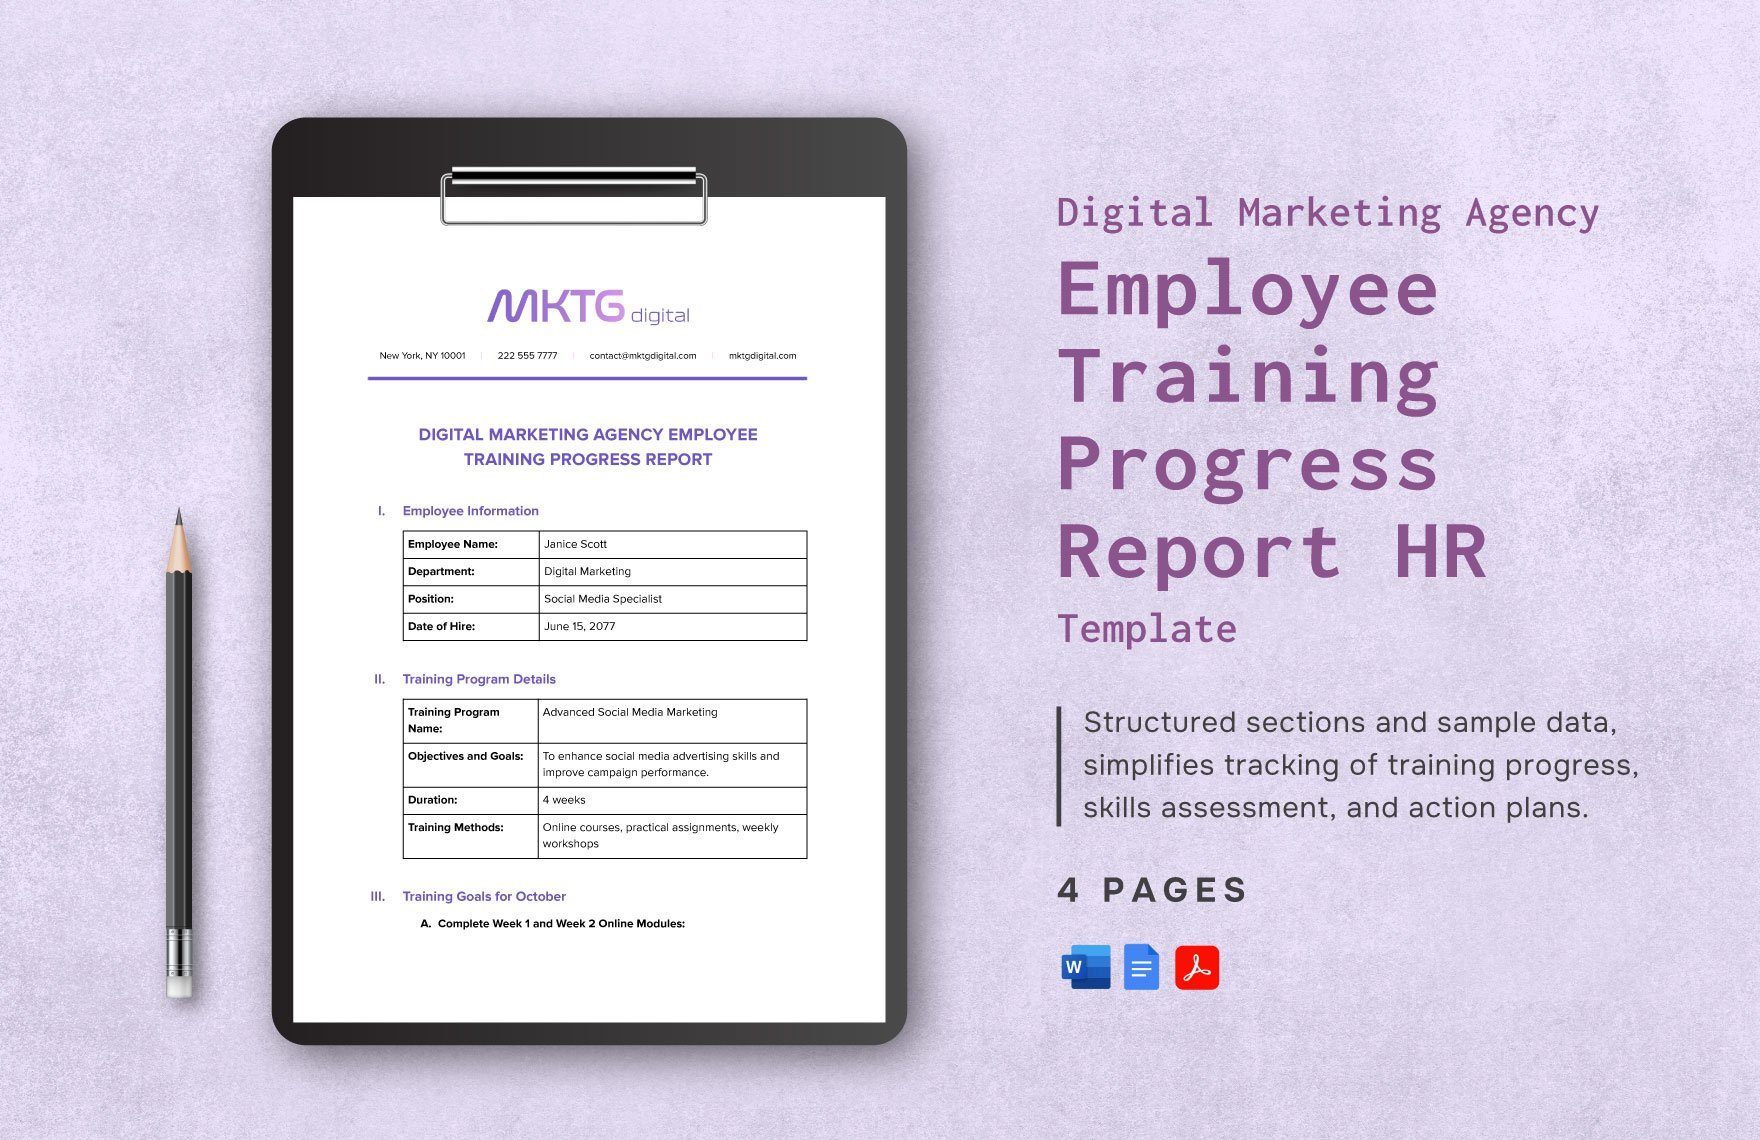 Digital Marketing Agency Employee Training Progress Report HR Template